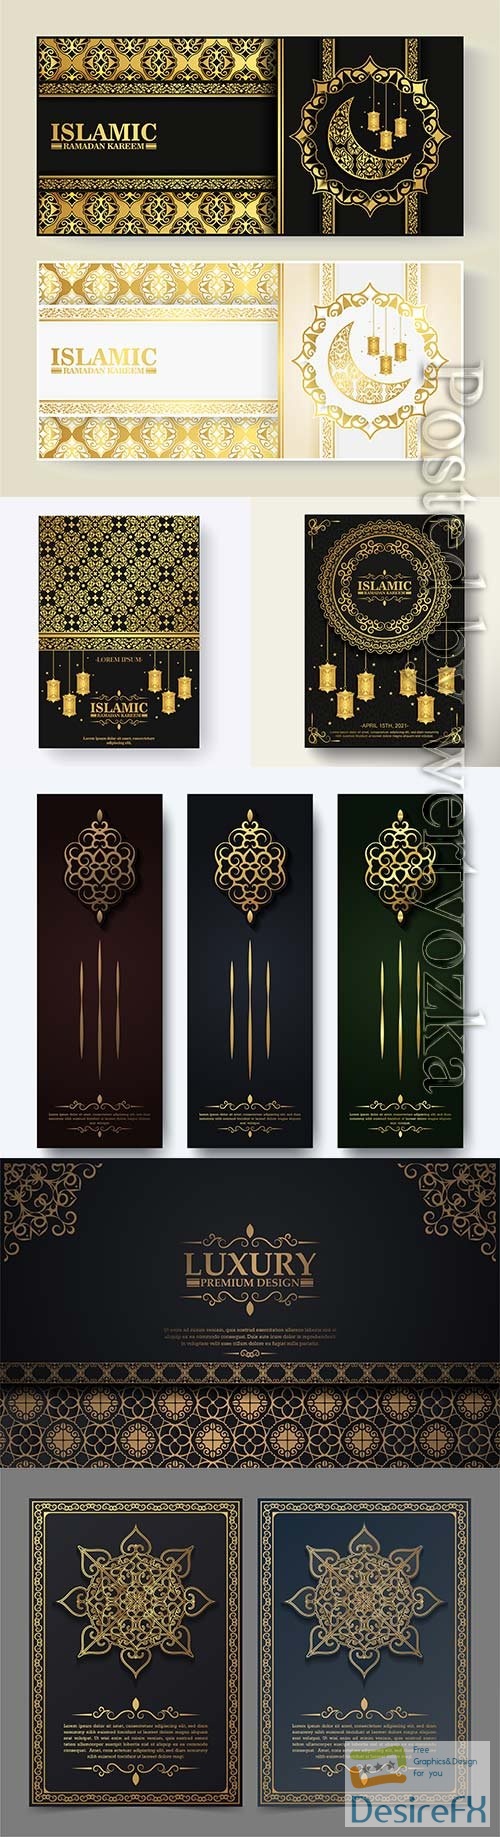 Luxury islamic ramadan kareem vector greeting card